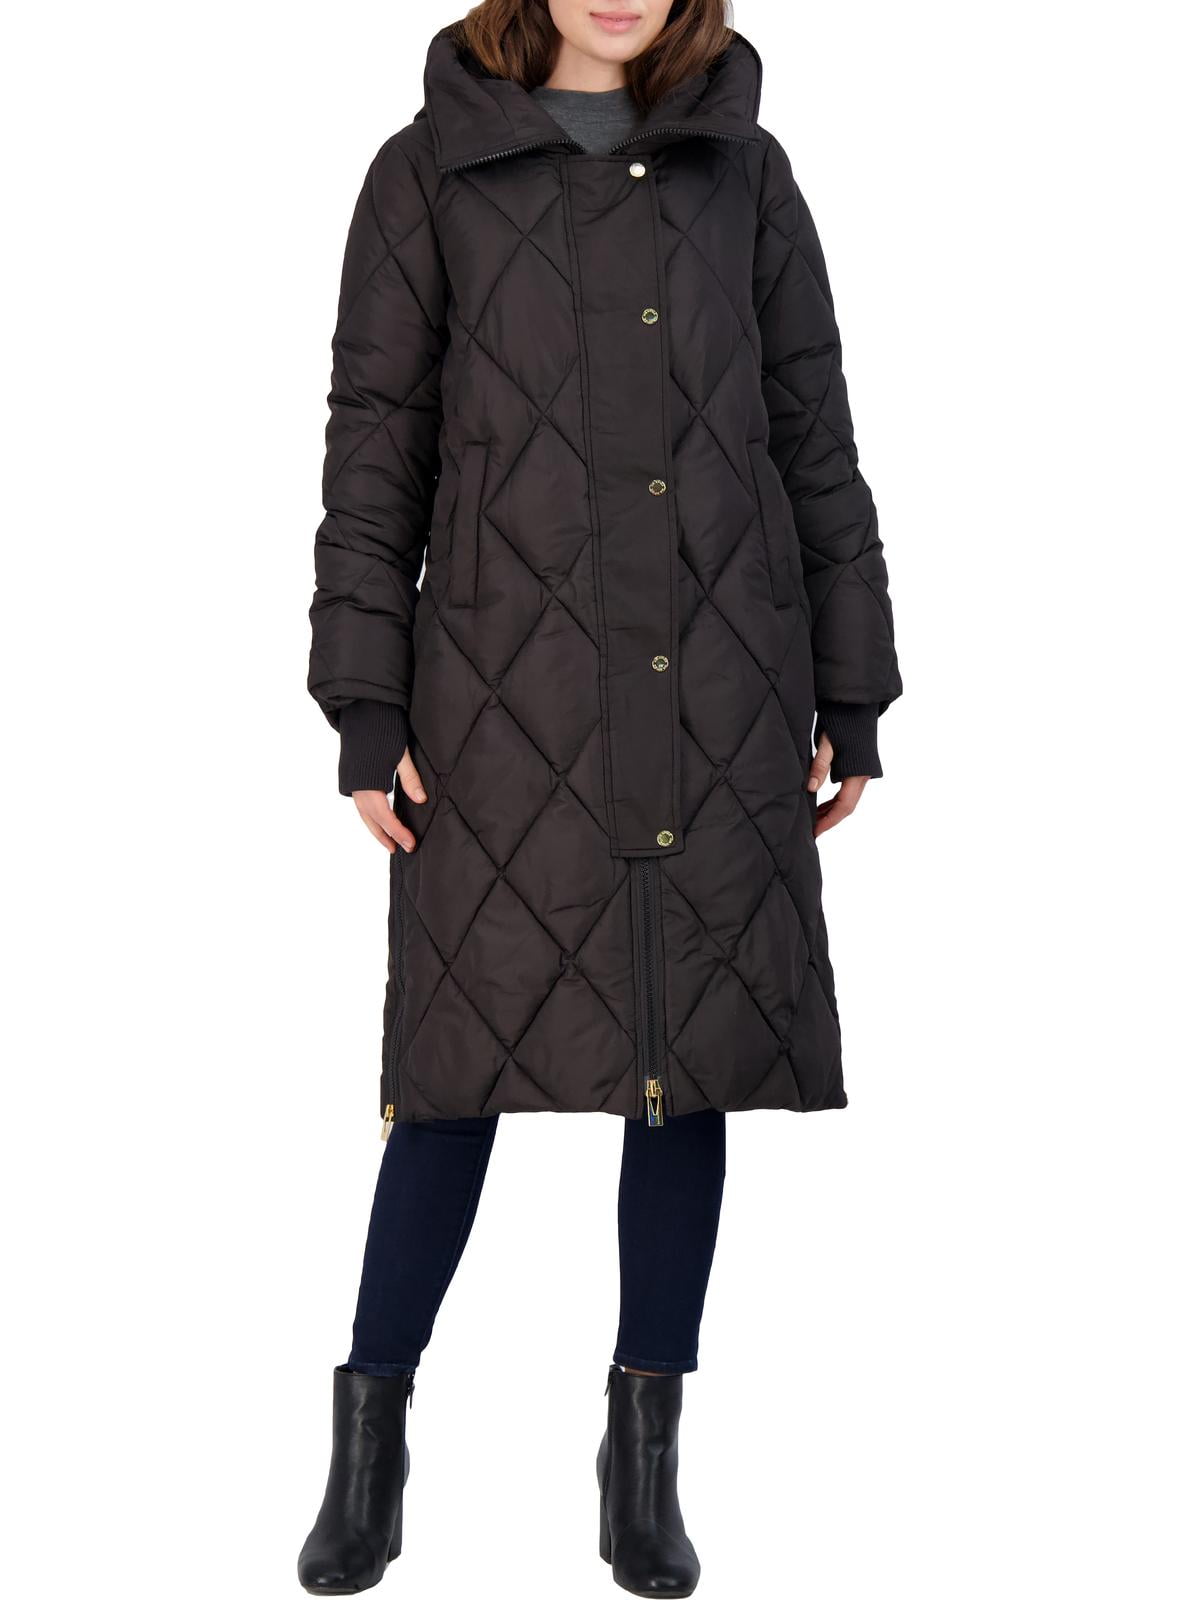 Via Spiga Women's Diamond Quilted Long Hooded Winter Puffer Coat ...